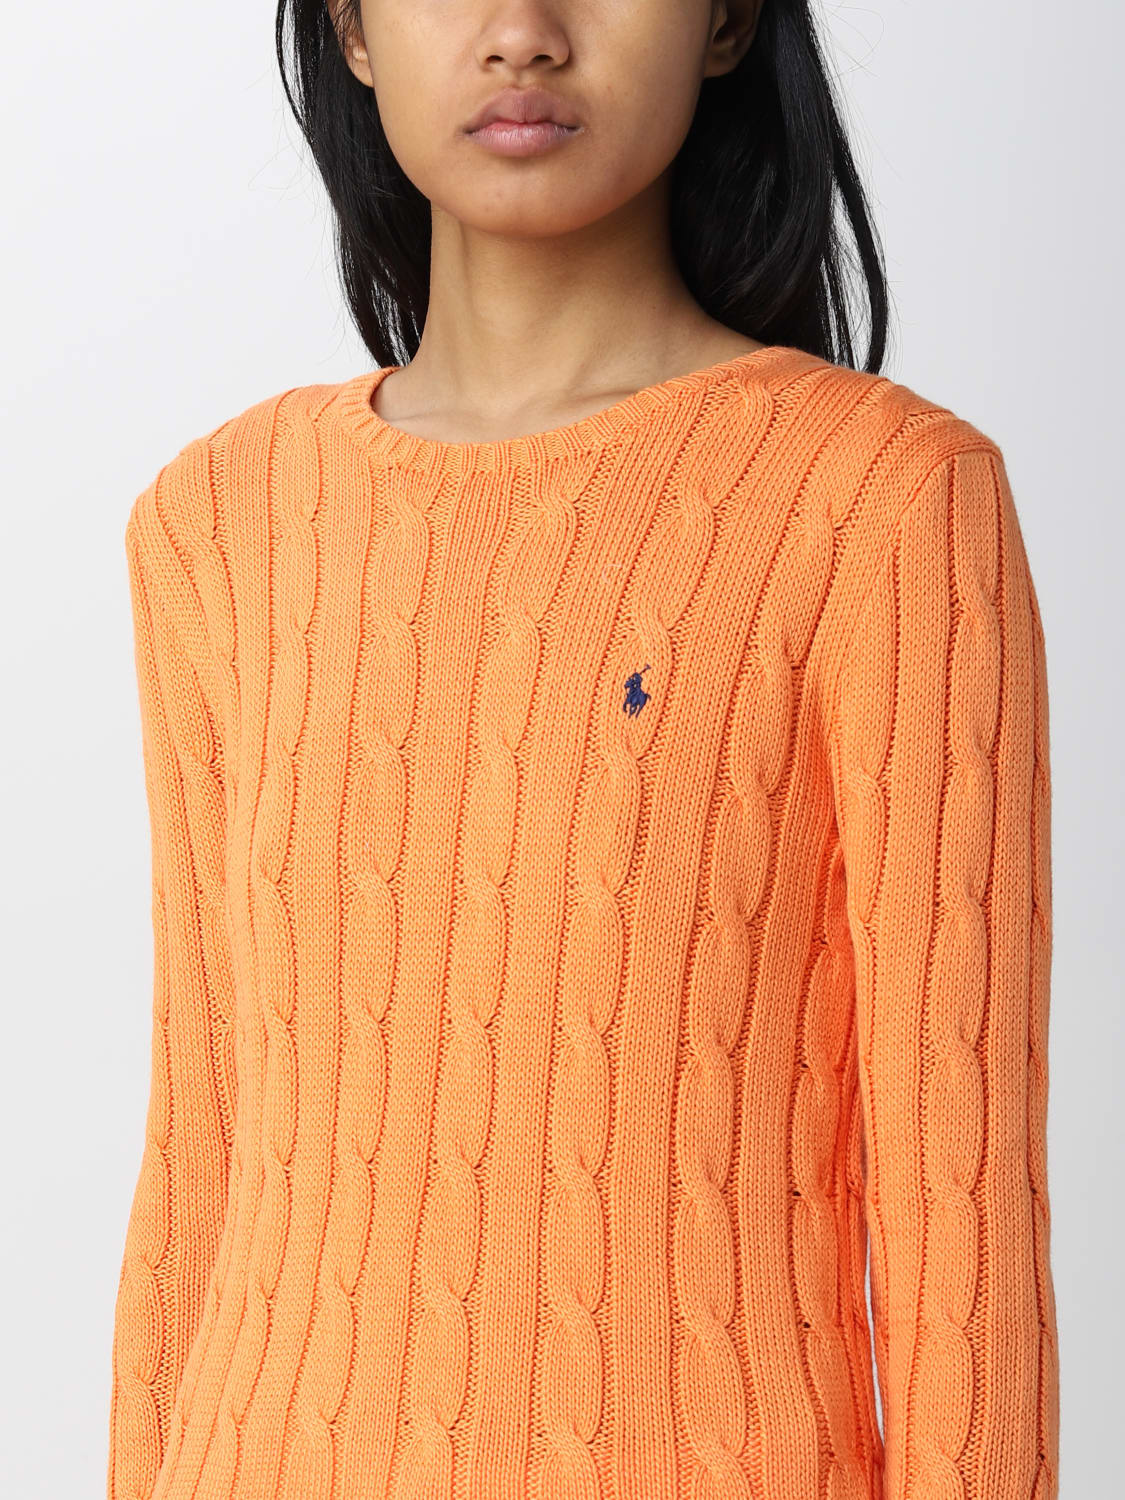 POLO RALPH LAUREN: sweater for woman - Orange | Polo Ralph Lauren sweater online at GIGLIO.COM